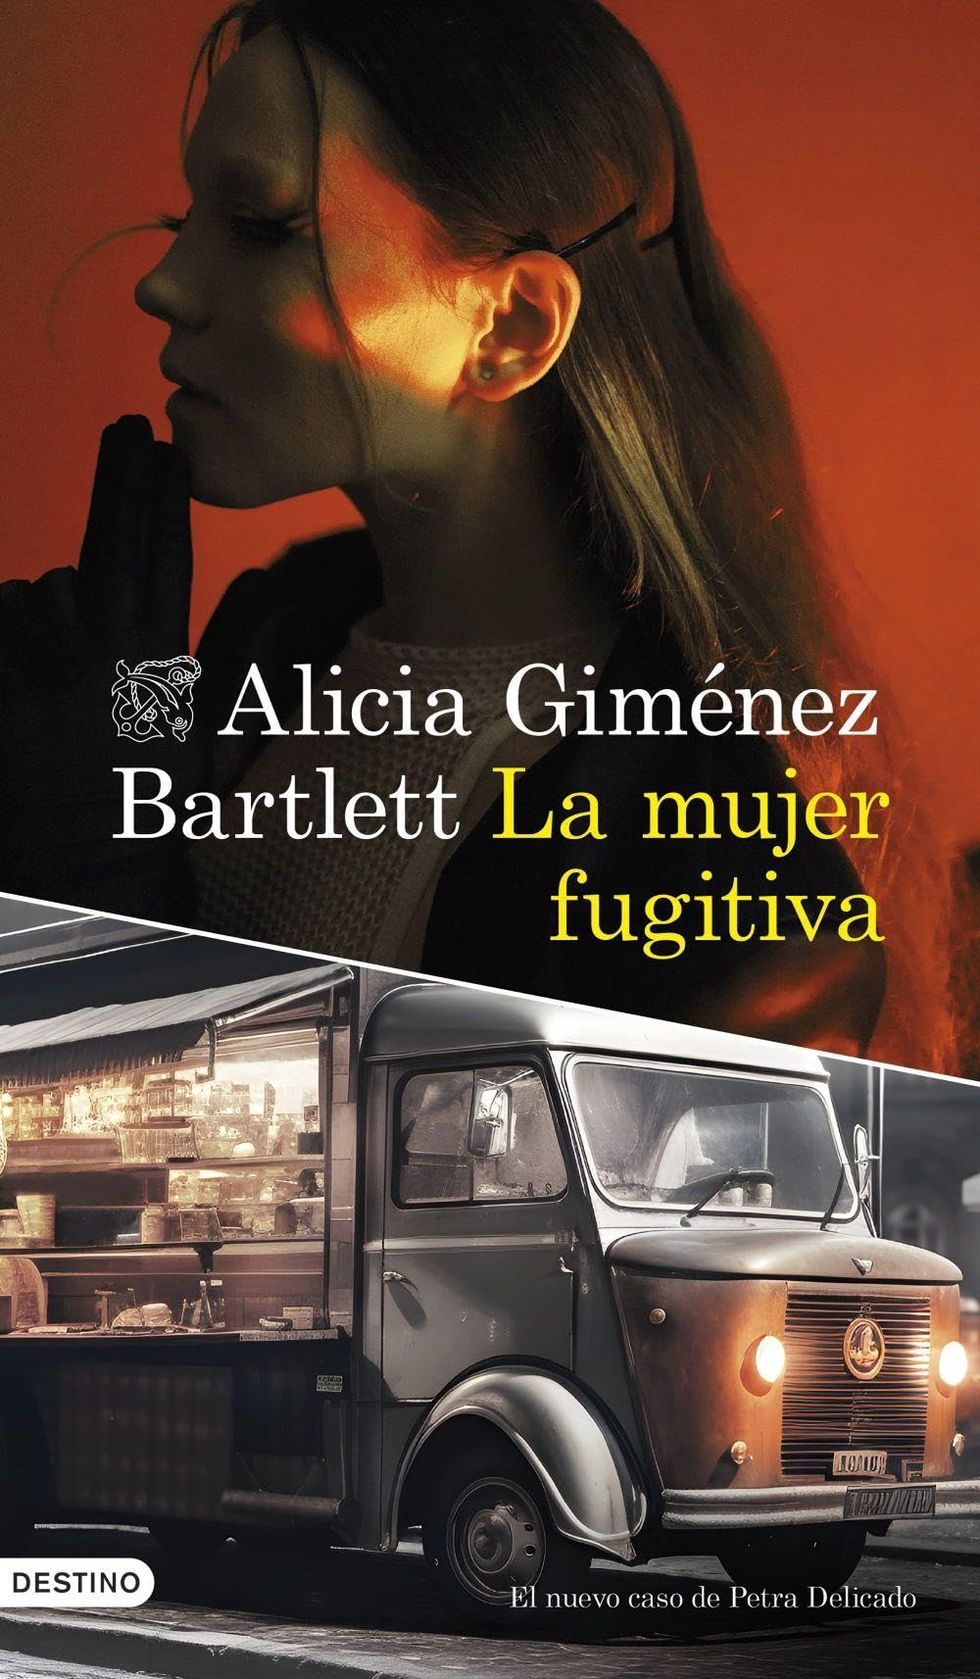 'La mujer fugitiva' de Alicia Giménez Bartlett